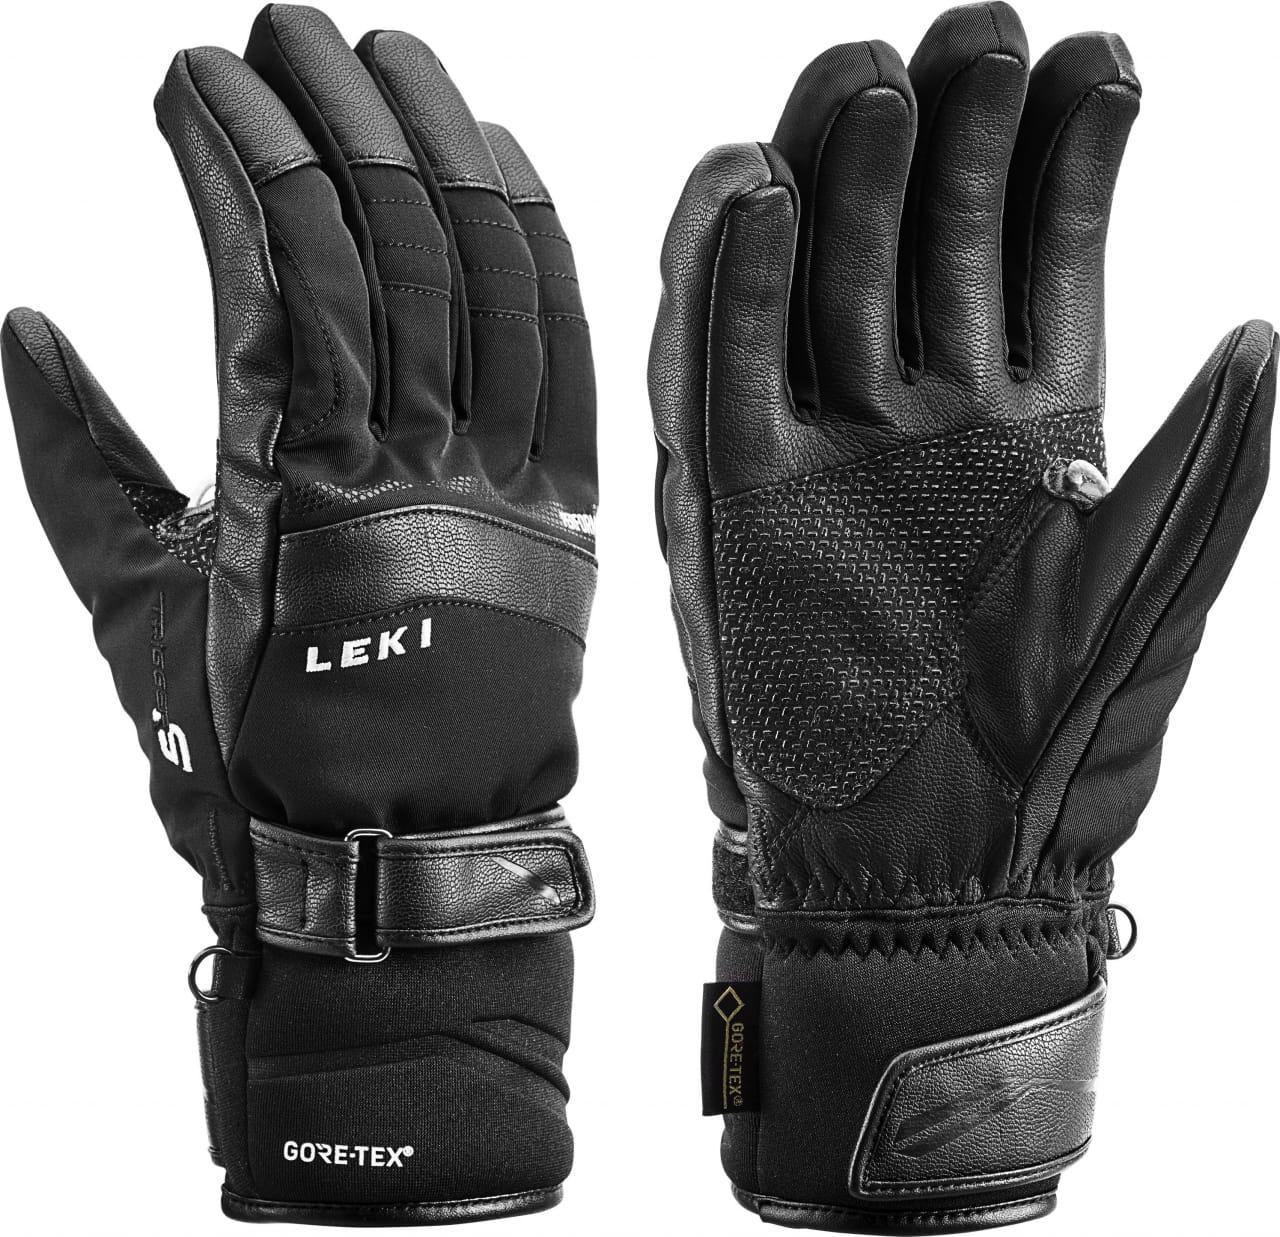 Zimní rukavice Leki Performance S GTX